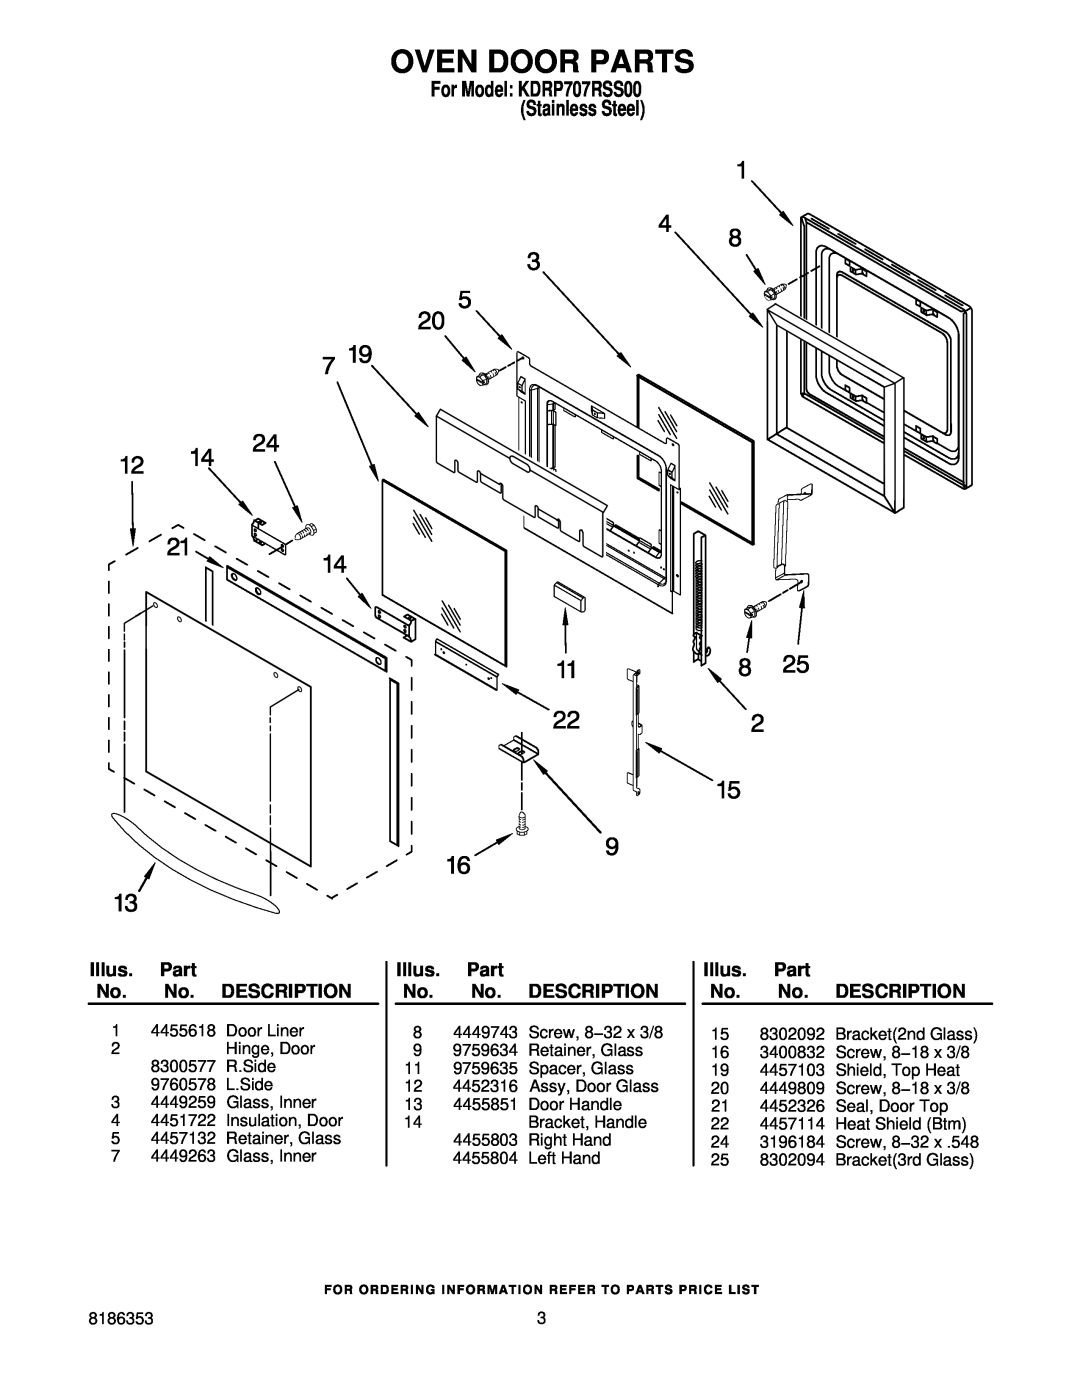 KitchenAid KDRP707RSS00 manual Oven Door Parts, Illus. Part No. No. DESCRIPTION 